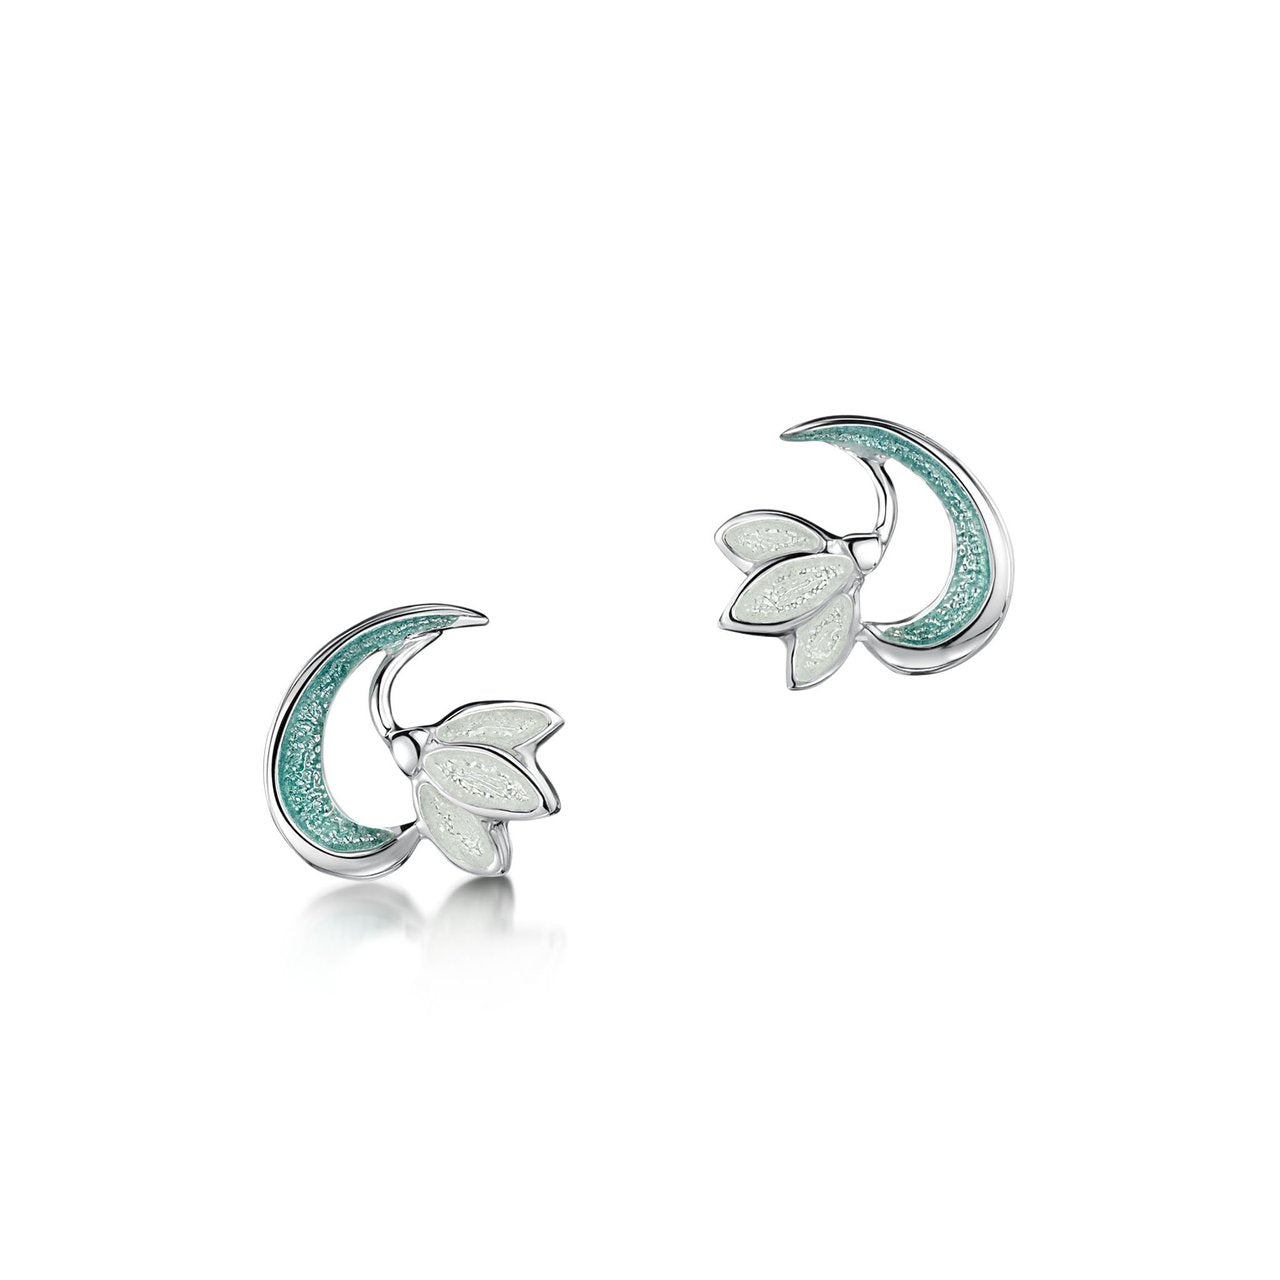 Snowdrop Sterling Silver Stud Earrings in Leaf Enamel